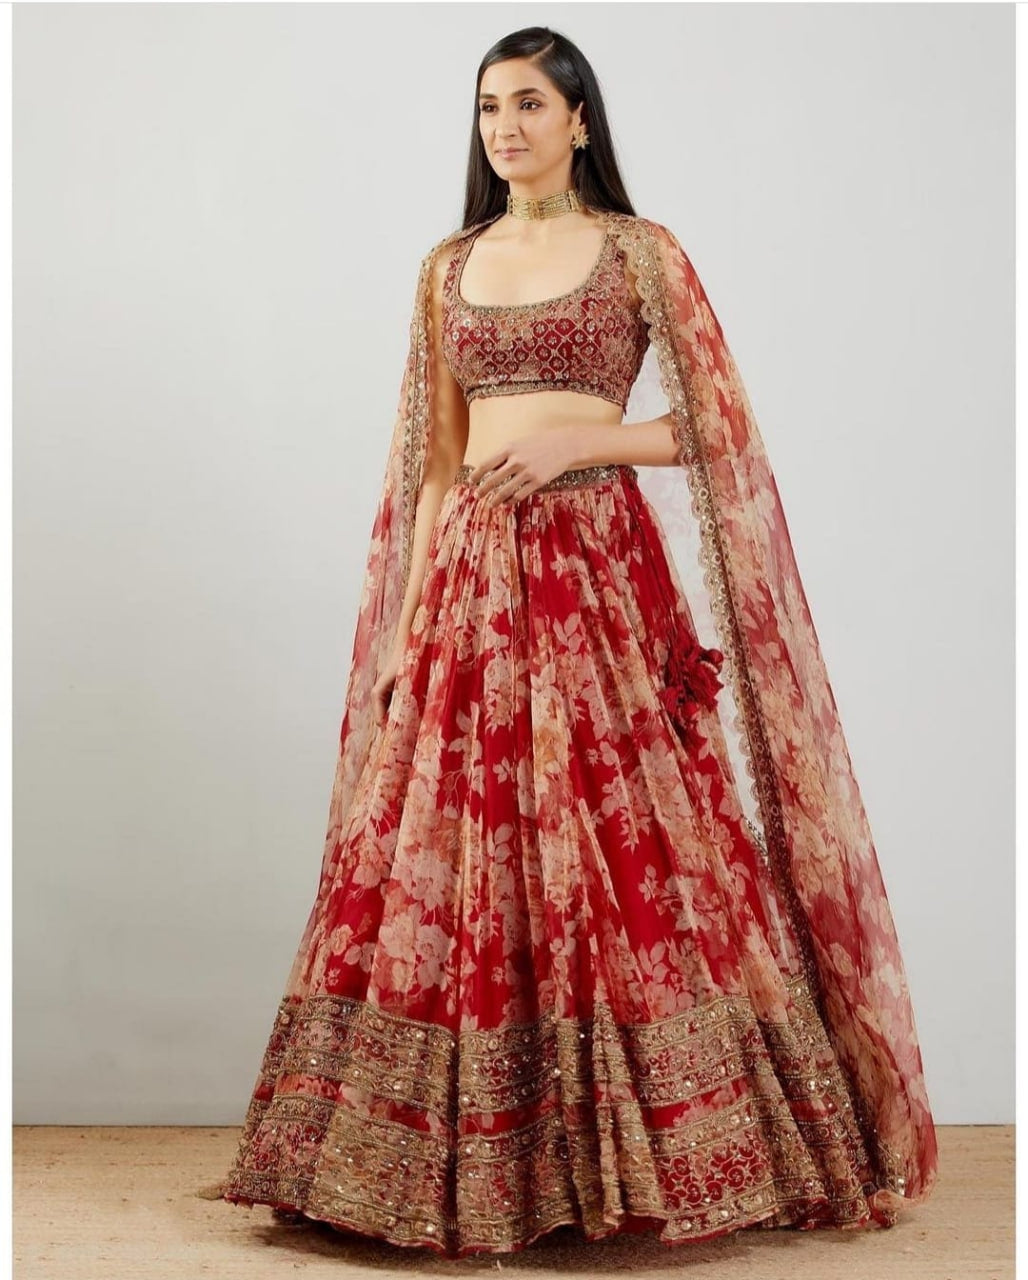 Buy Red faux georgette wedding designer lehenga choli at